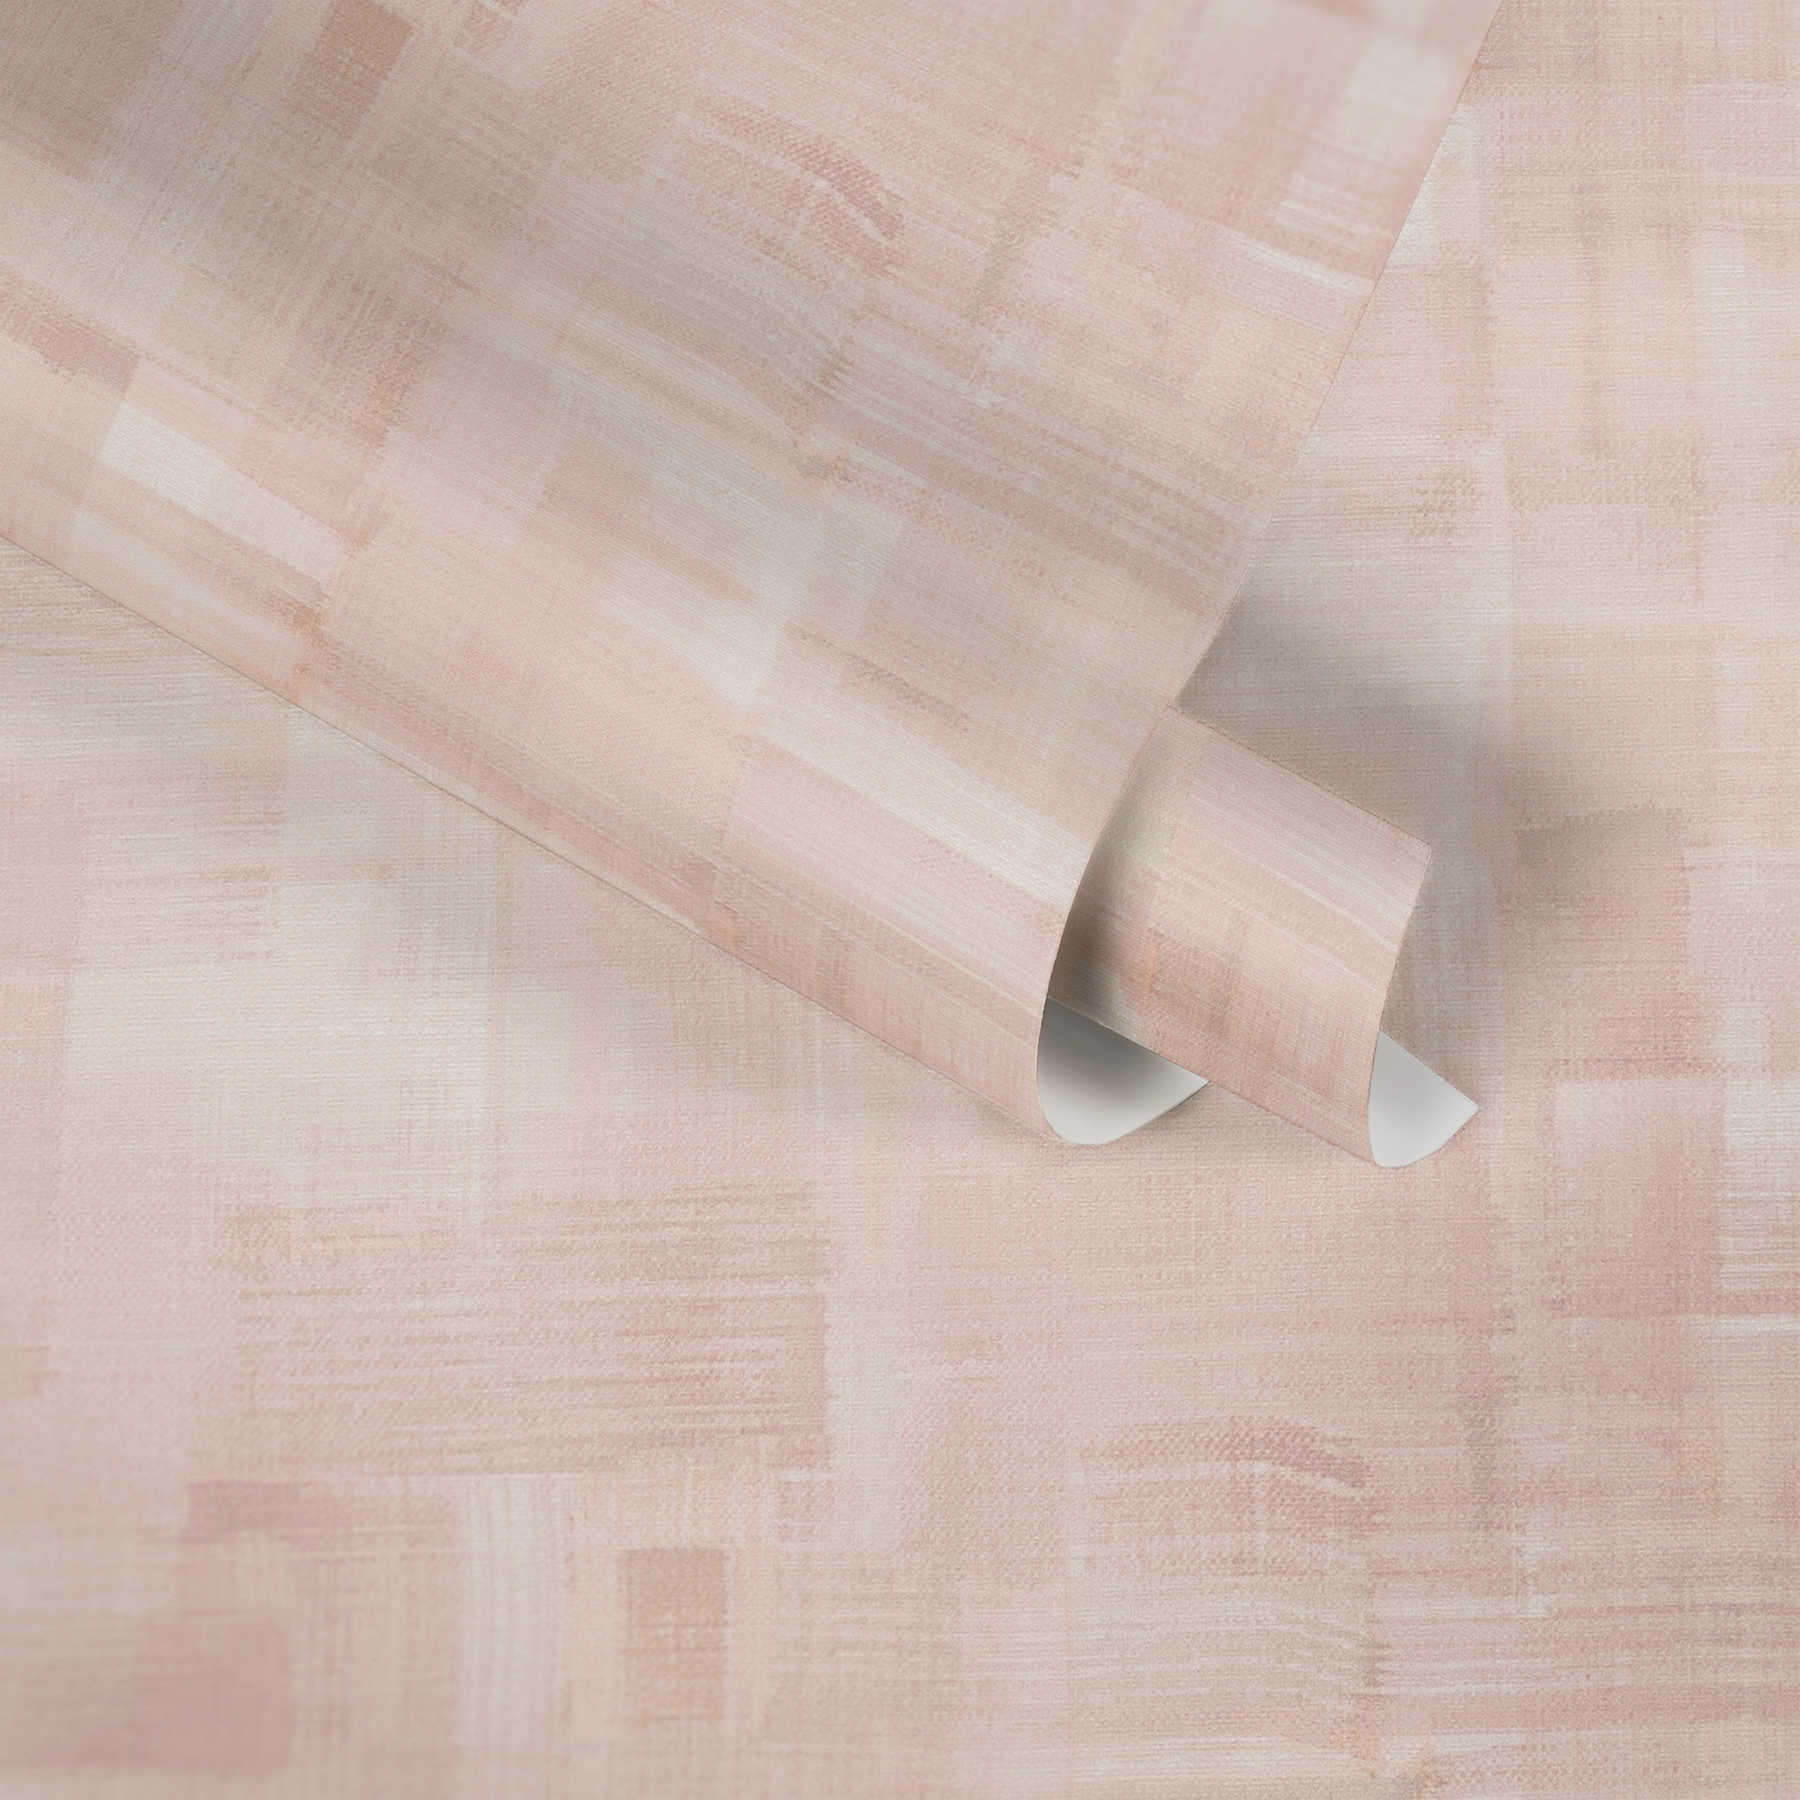             Lienzo de papel pintado Estructura, Tipo Moderno - Rosa, Beige
        